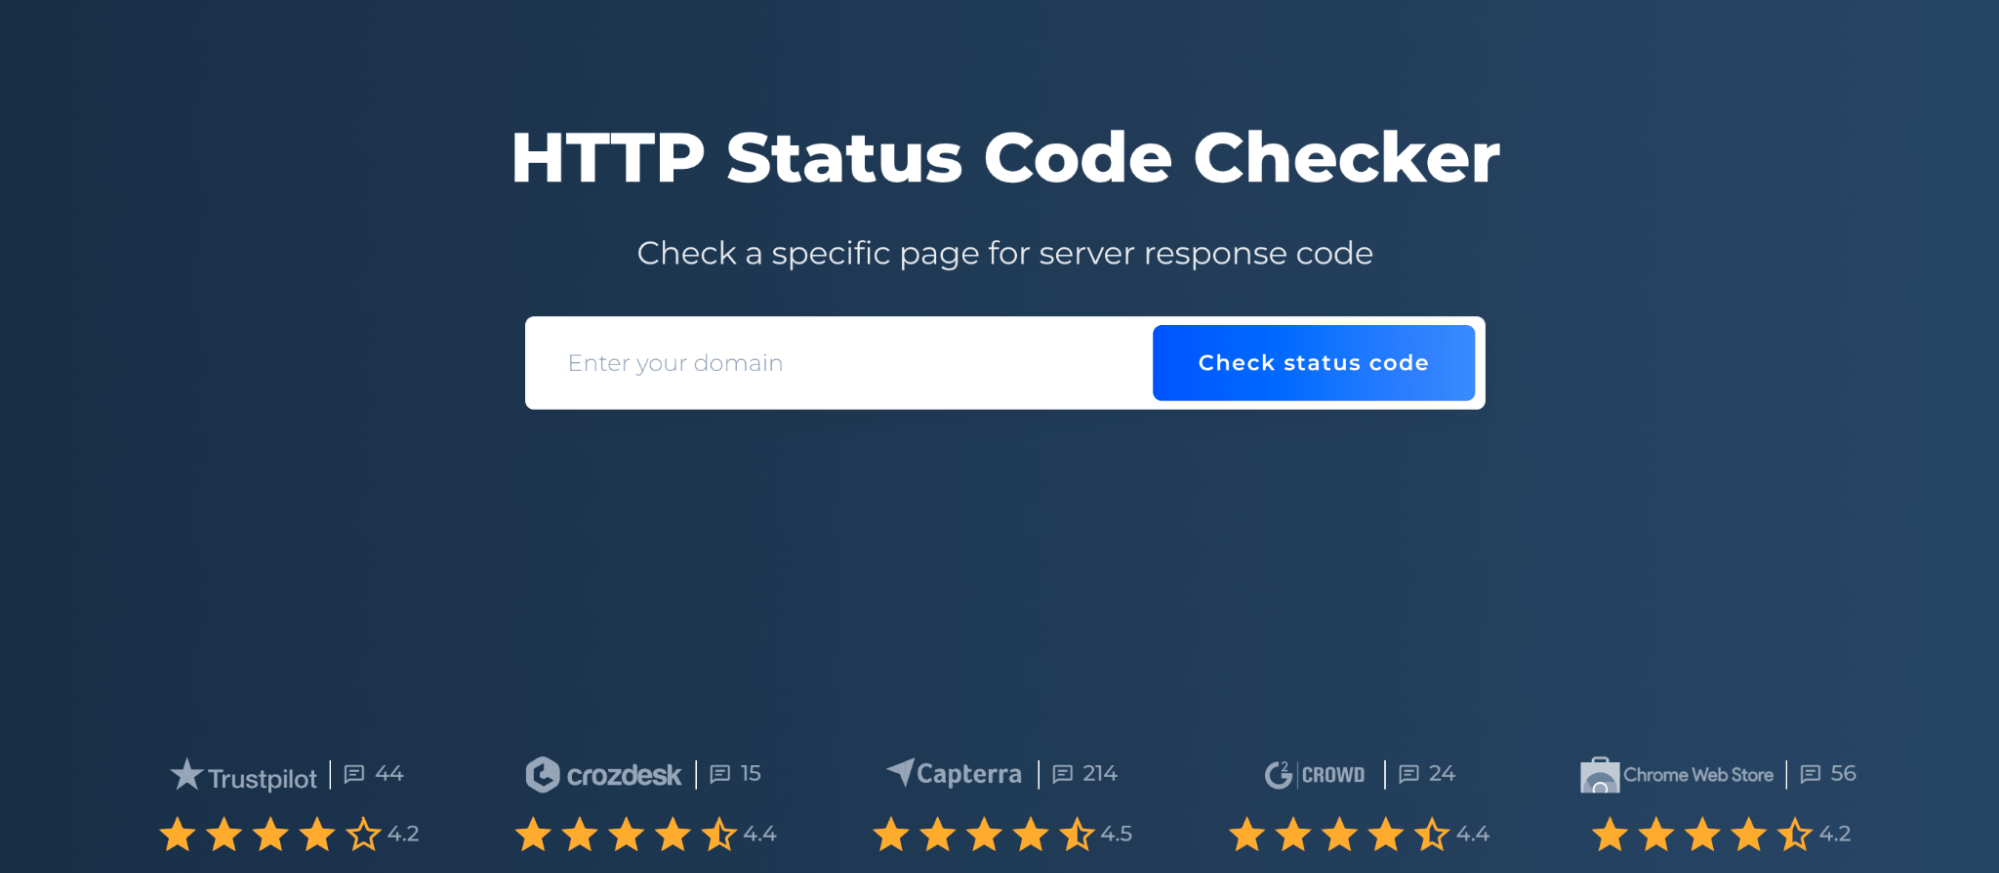 http-status-code-checker-tool-for-identifying-http-200-status